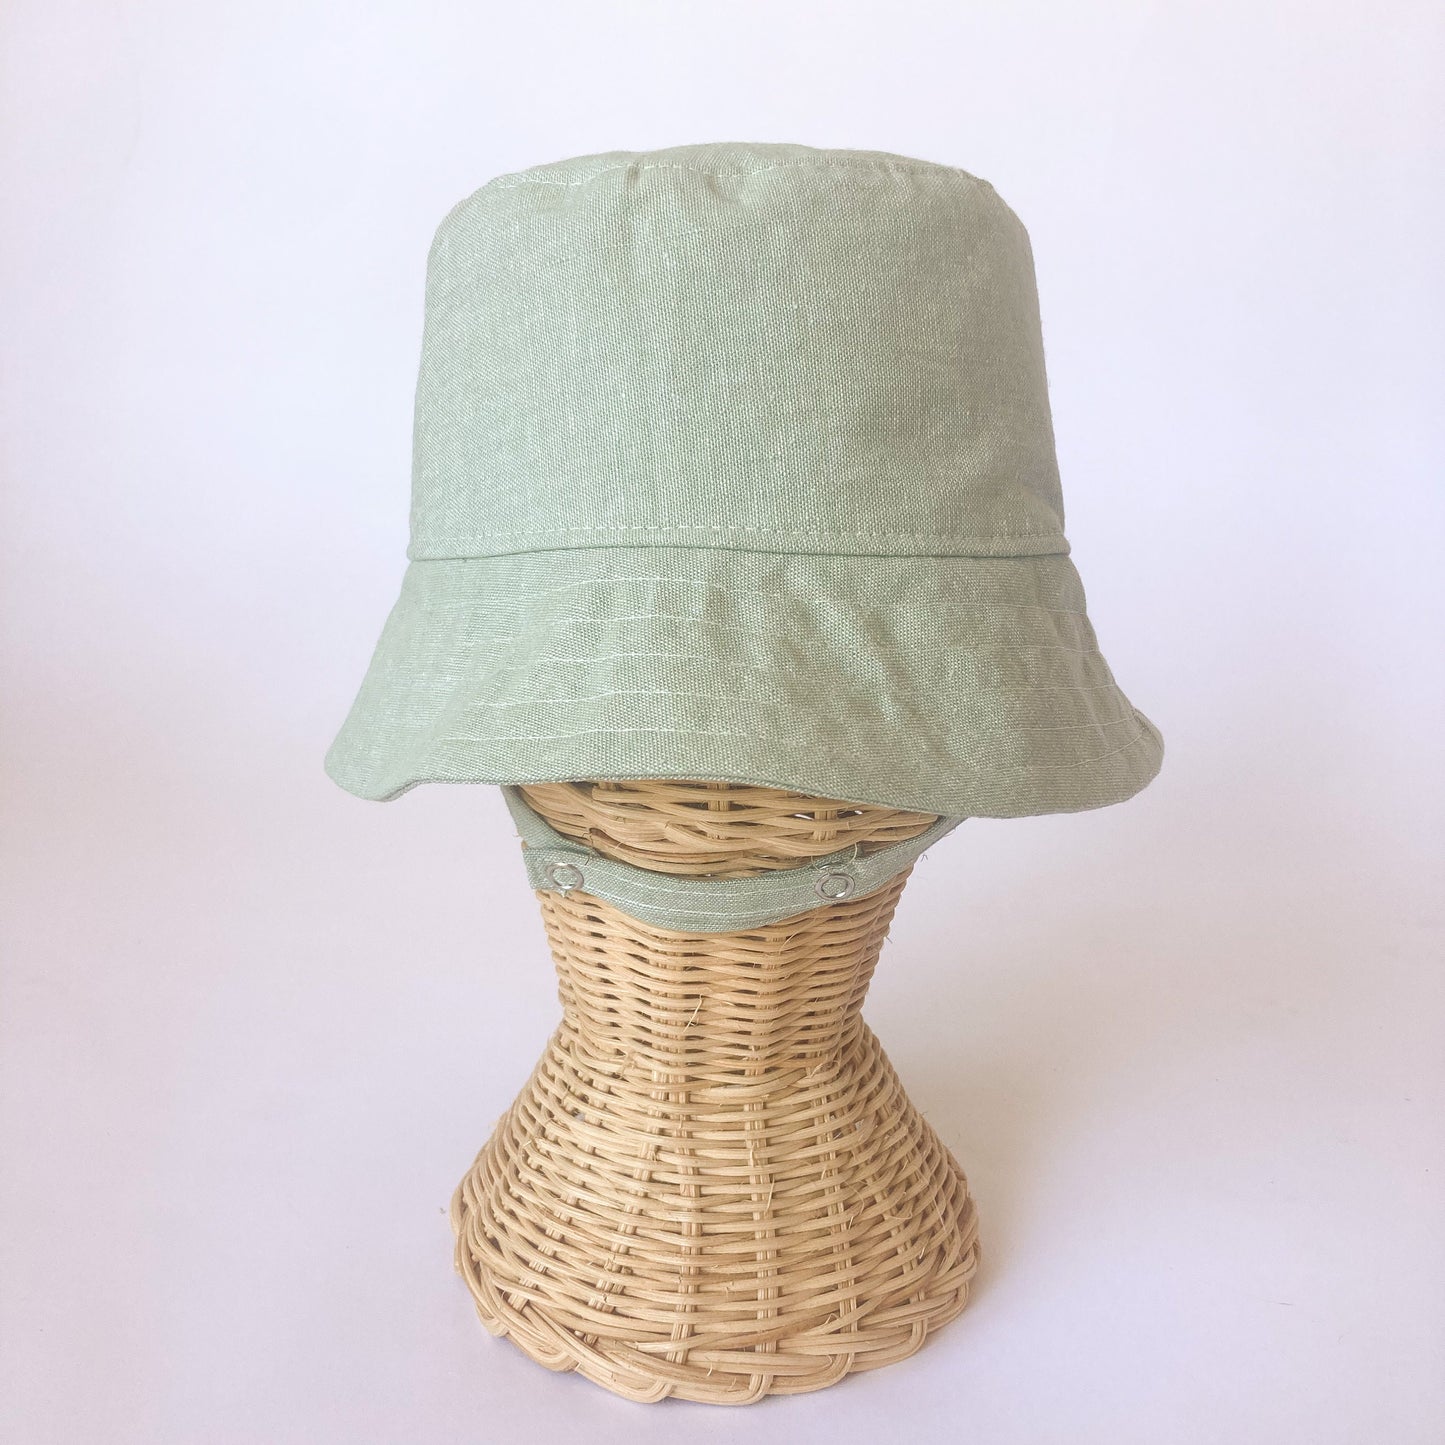 Summer Bucket Hat, Mint Green Hat, Handmade Sun Hat, Baby Sun Hat, Beach Sun Hat for Kids, Neutral Baby Gift, First Summer, Toddler Hat